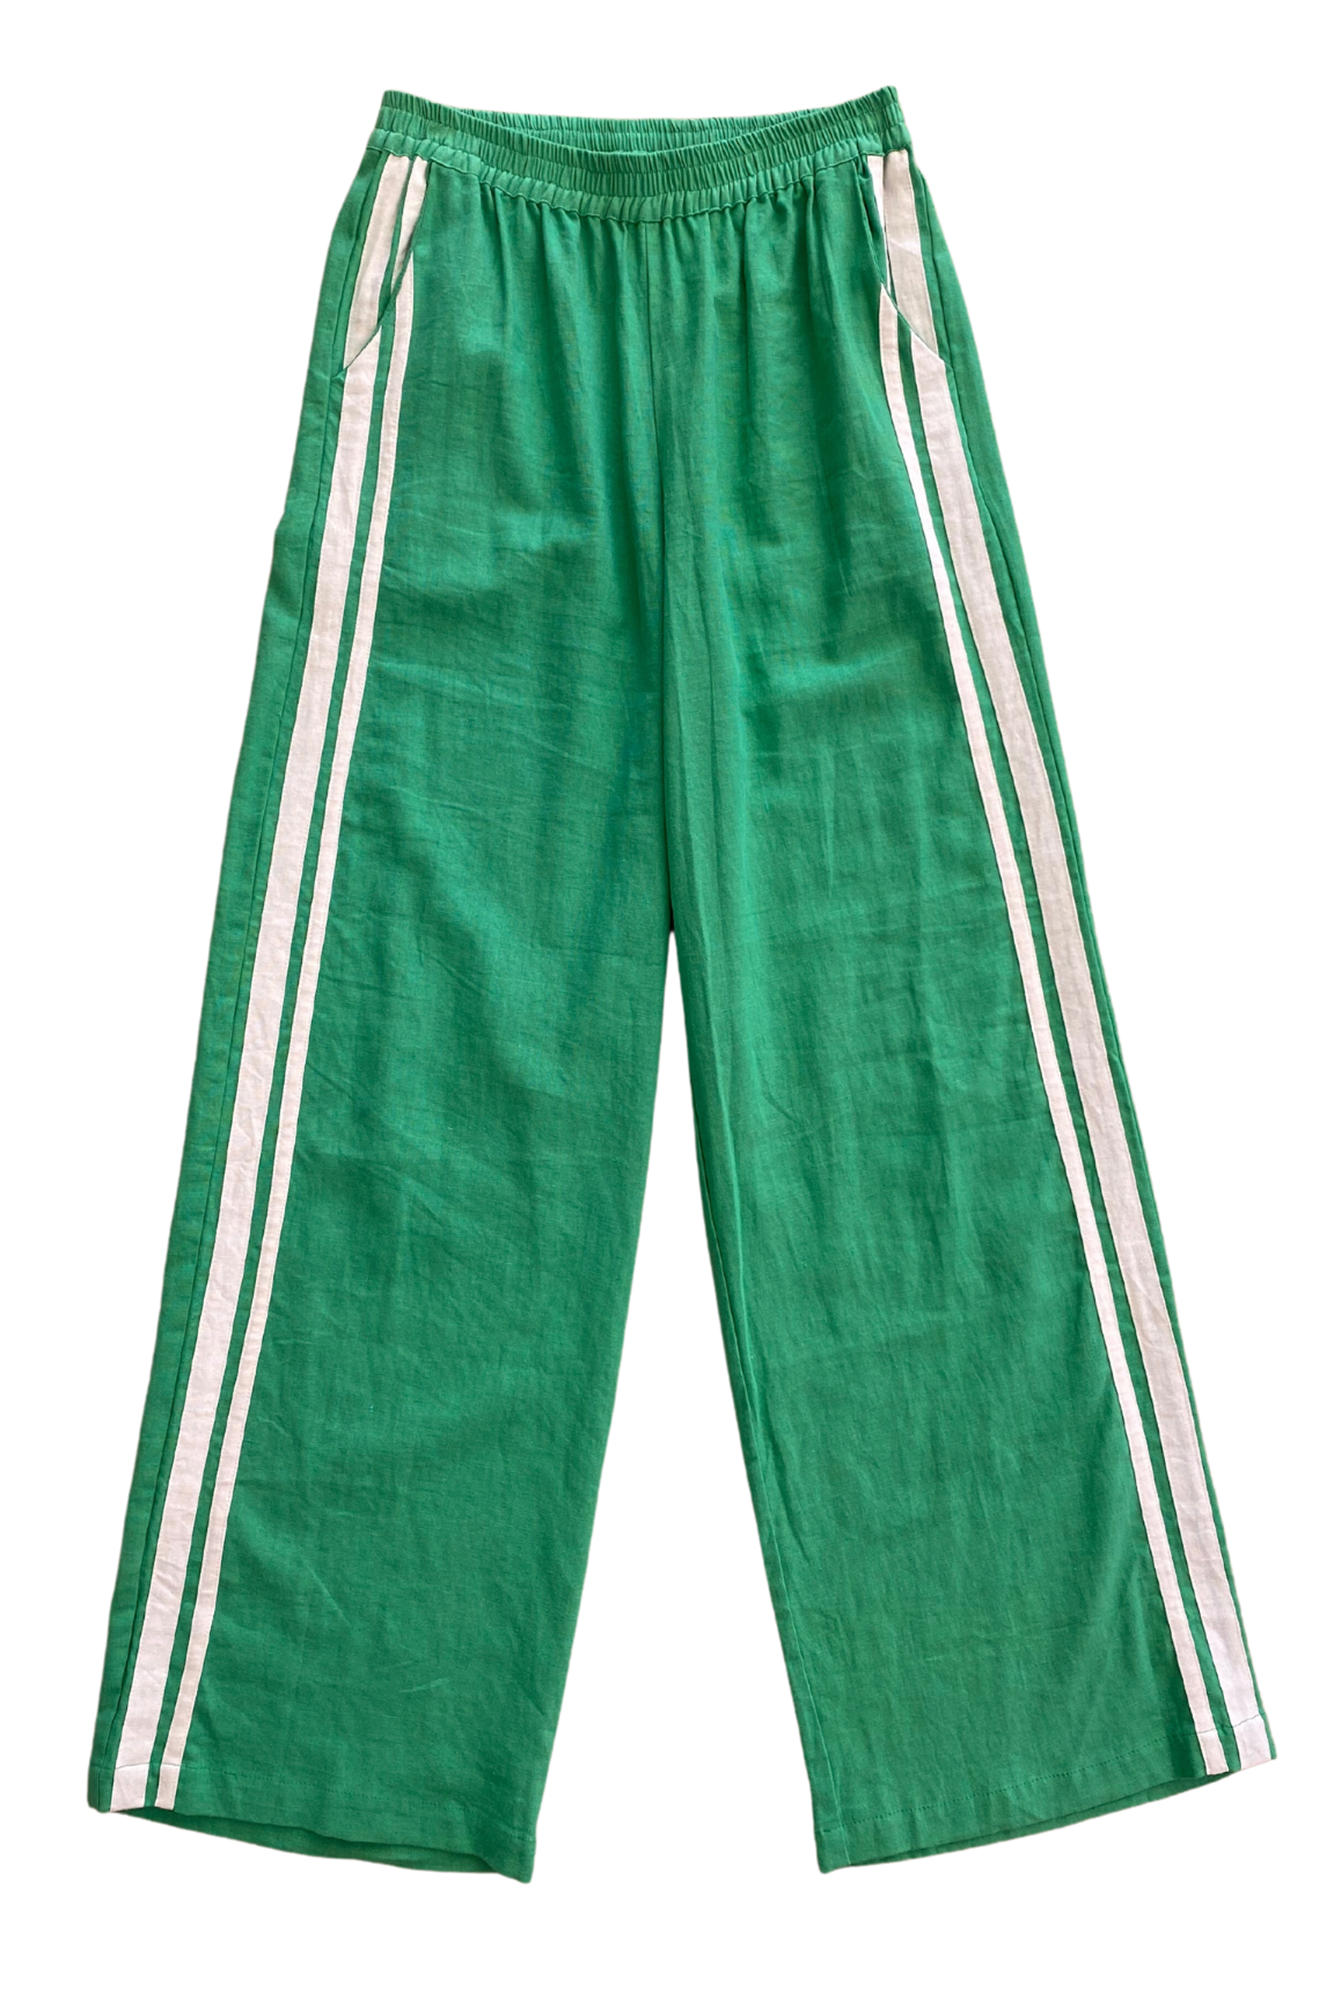 Jaya linen pant by zaziba studio green with white stripes down side